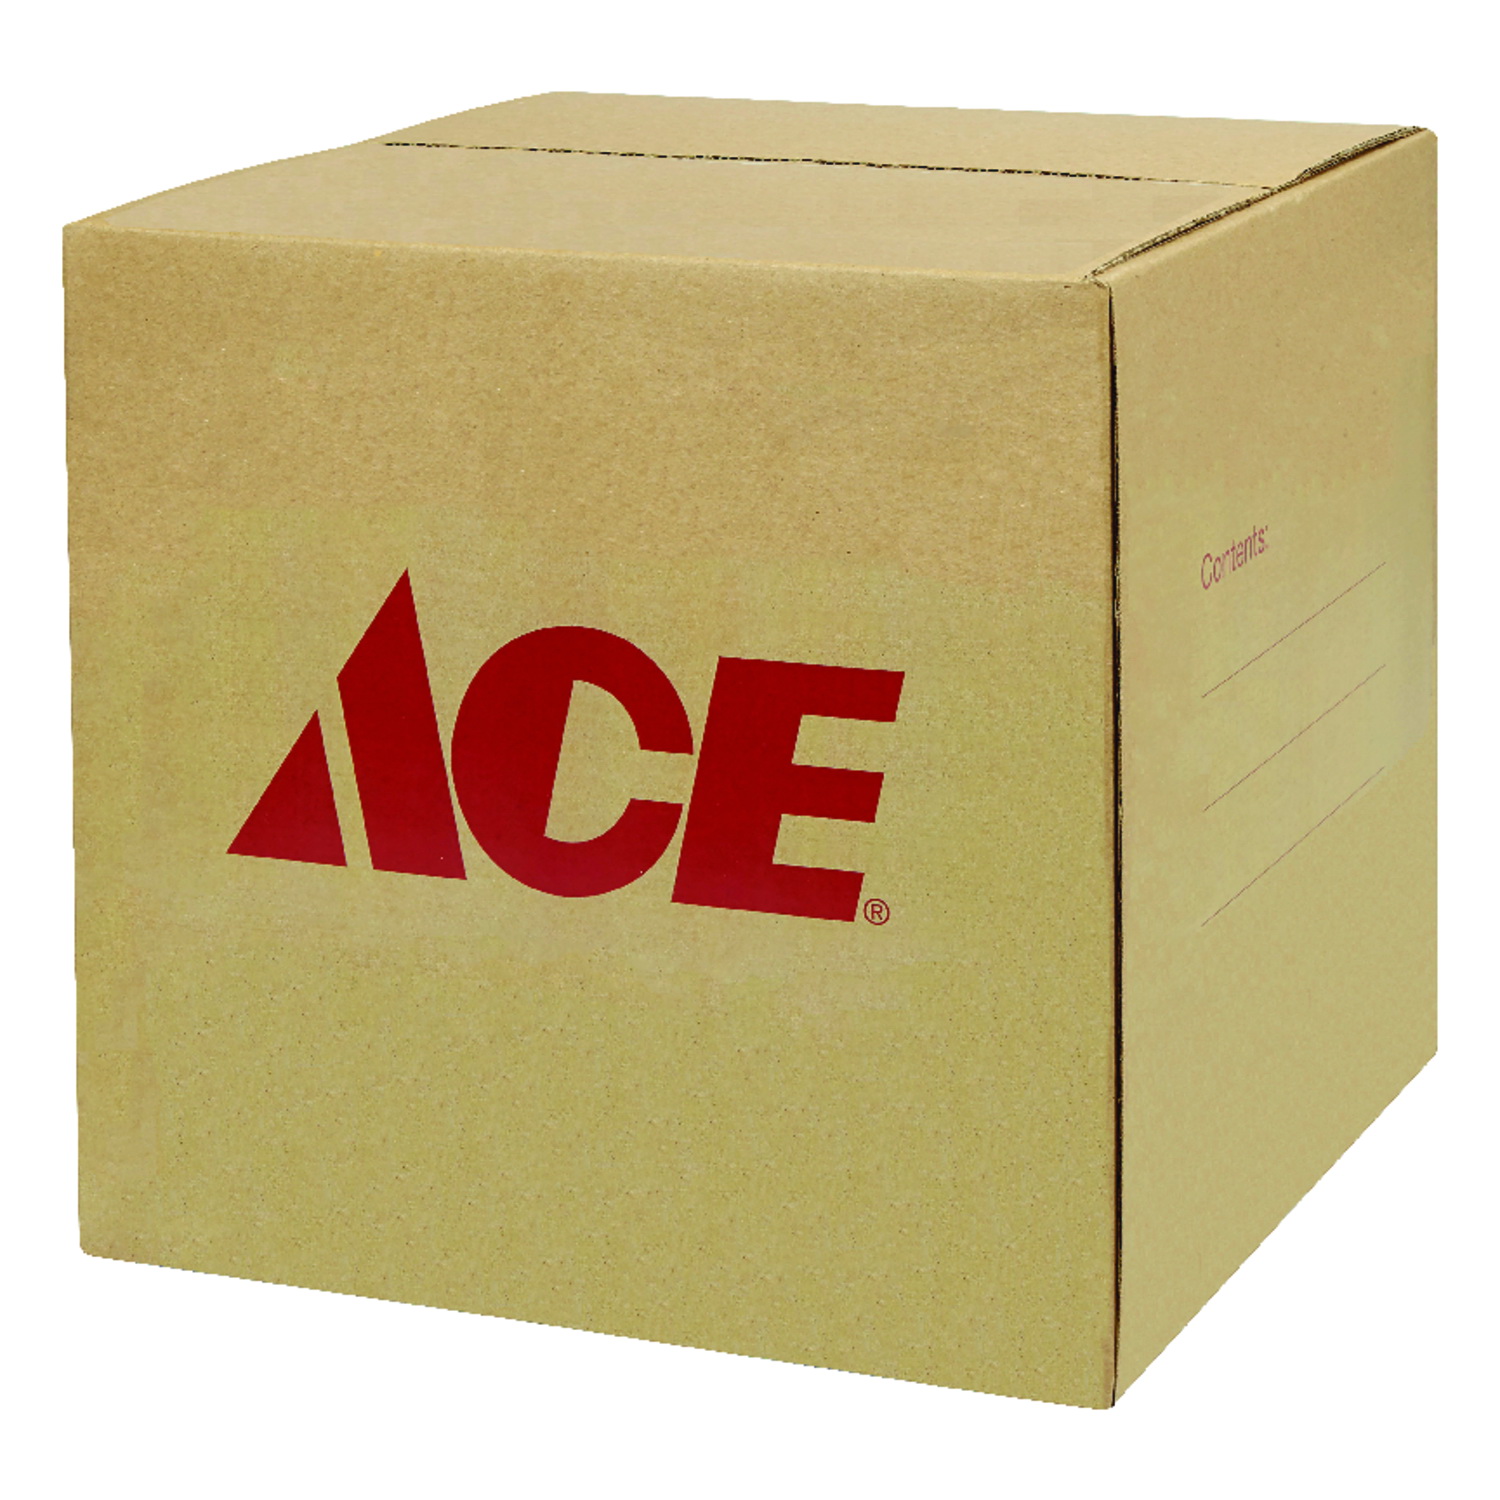 ACE 284686 Corrugated Box, 12 in L, 12 in W, 32 lb Capacity, Cardboard - 2